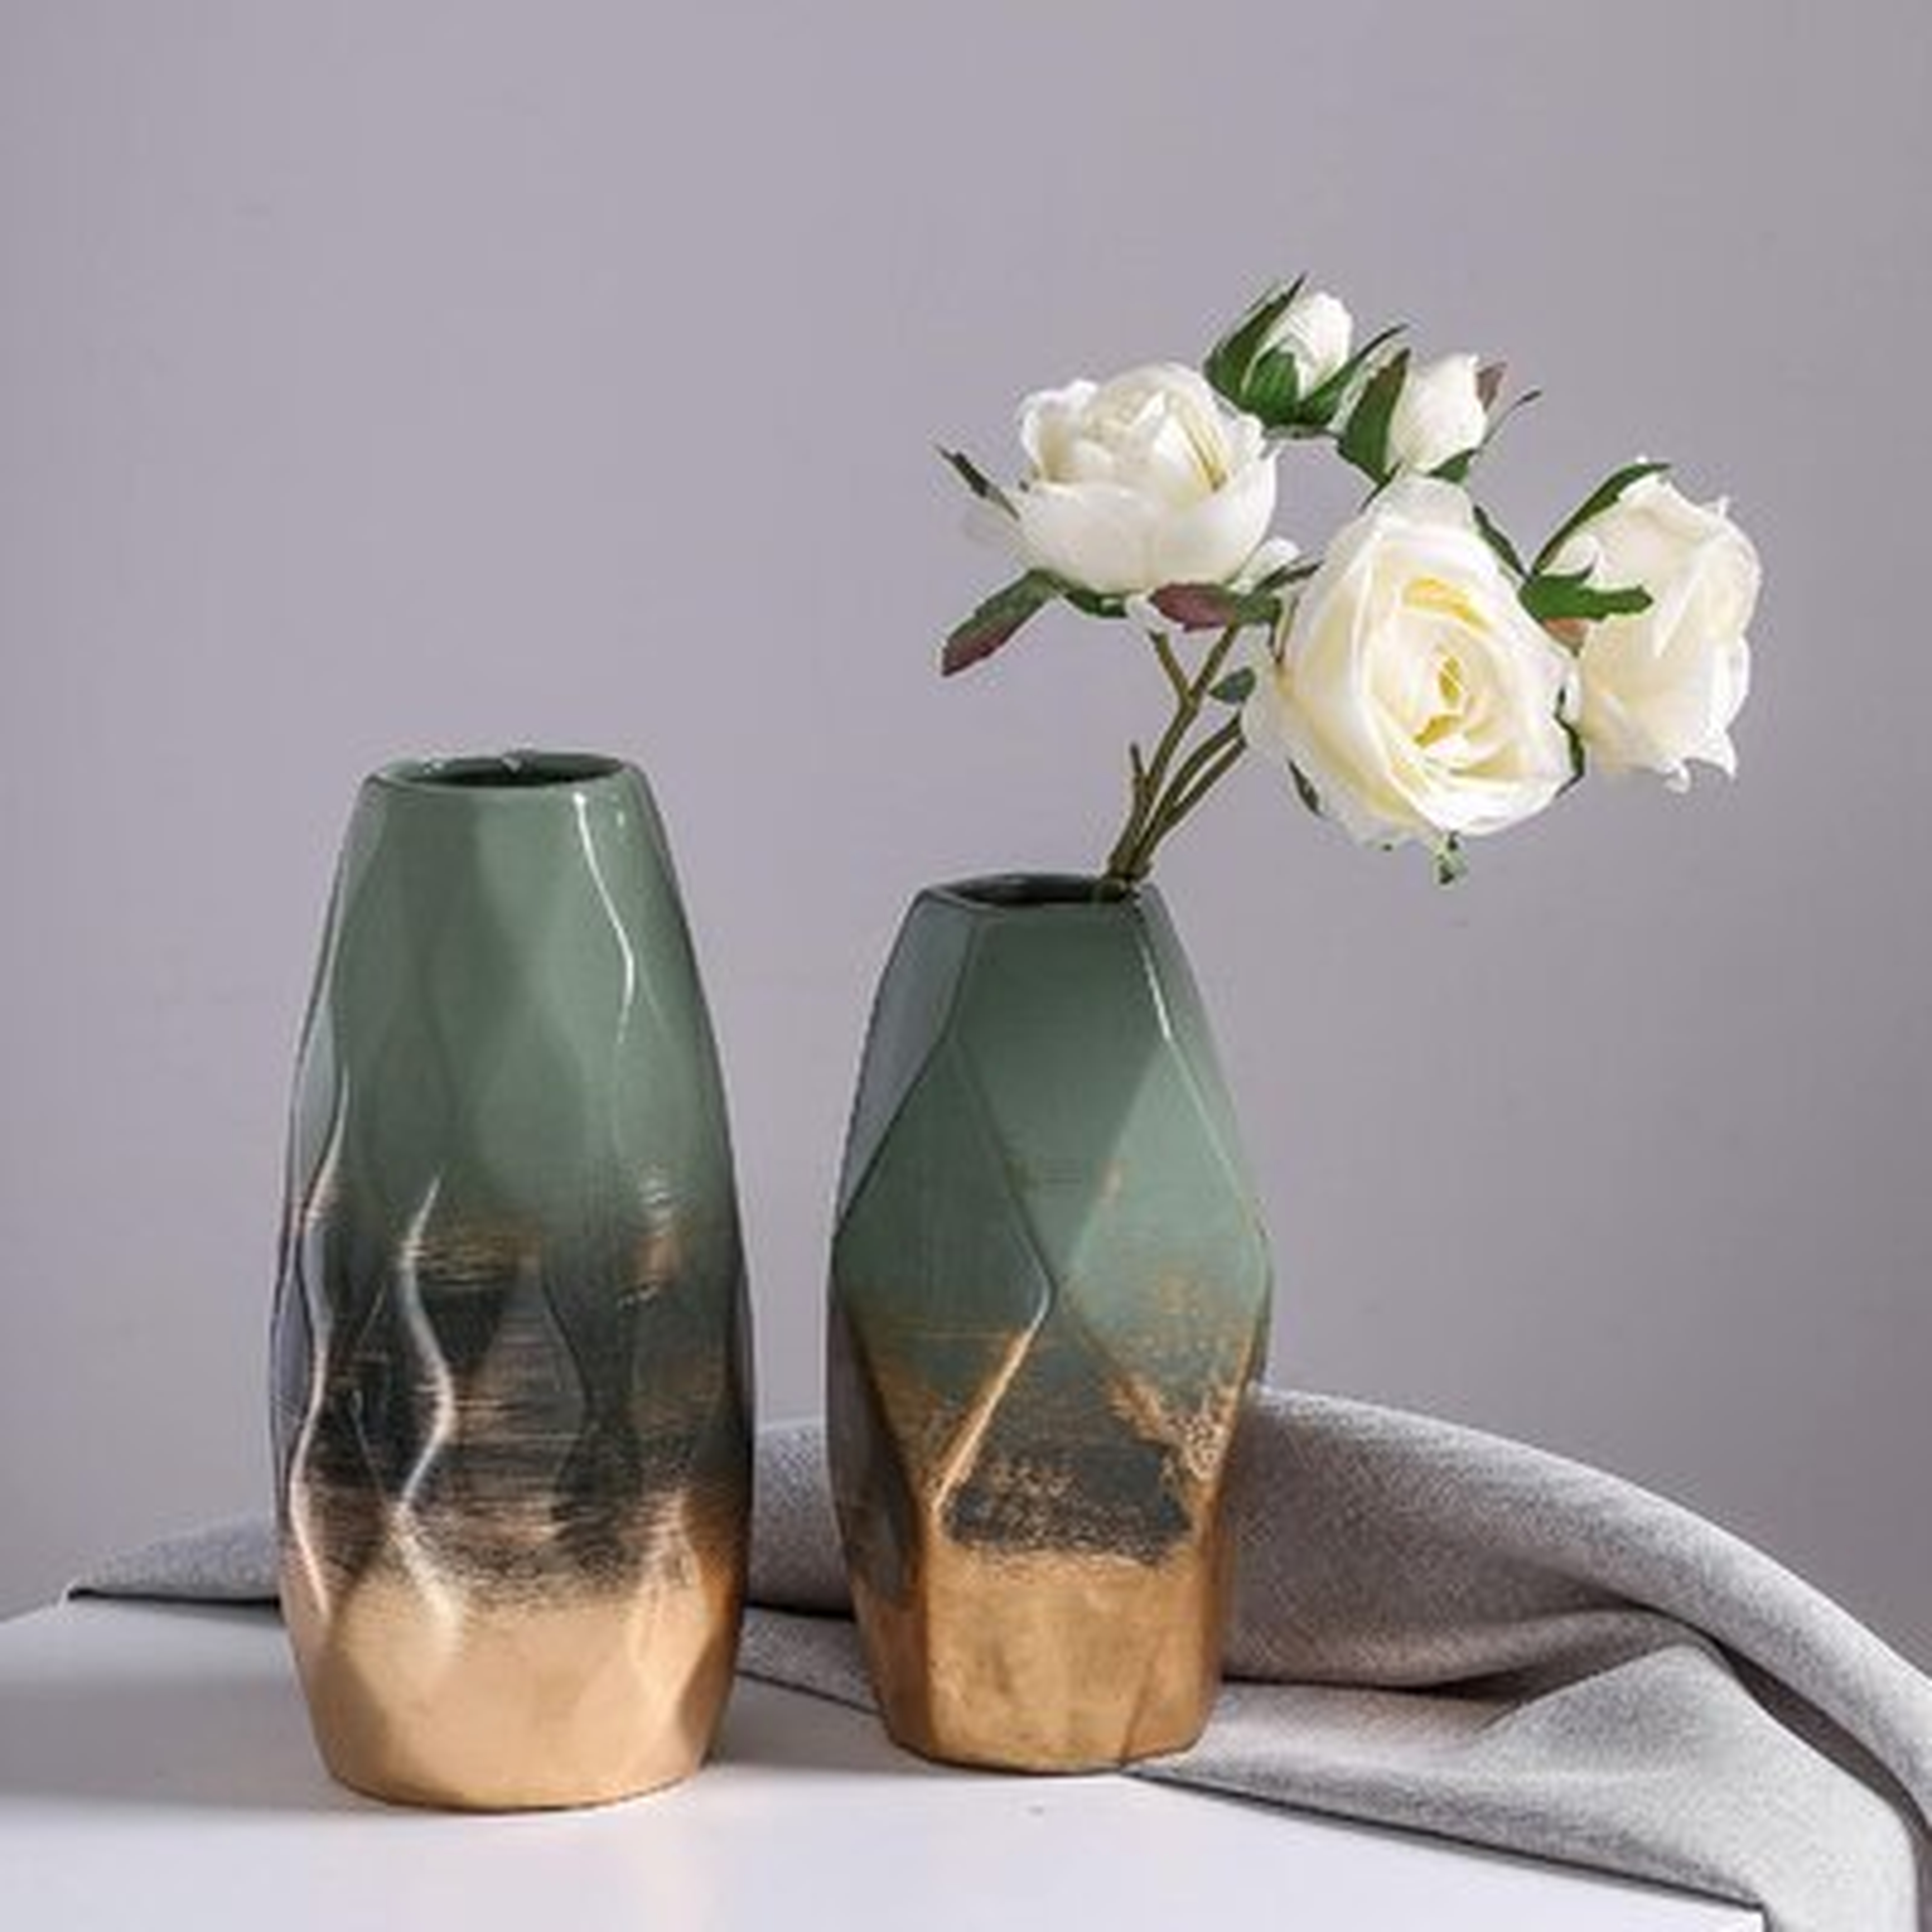 Modern Geometric Ceramic Vases Set Of 2, Green And Gold Vase For Home Decor, Decorative Vase For Living Room, Mantel, Table, Bedroom Decoration - Wayfair